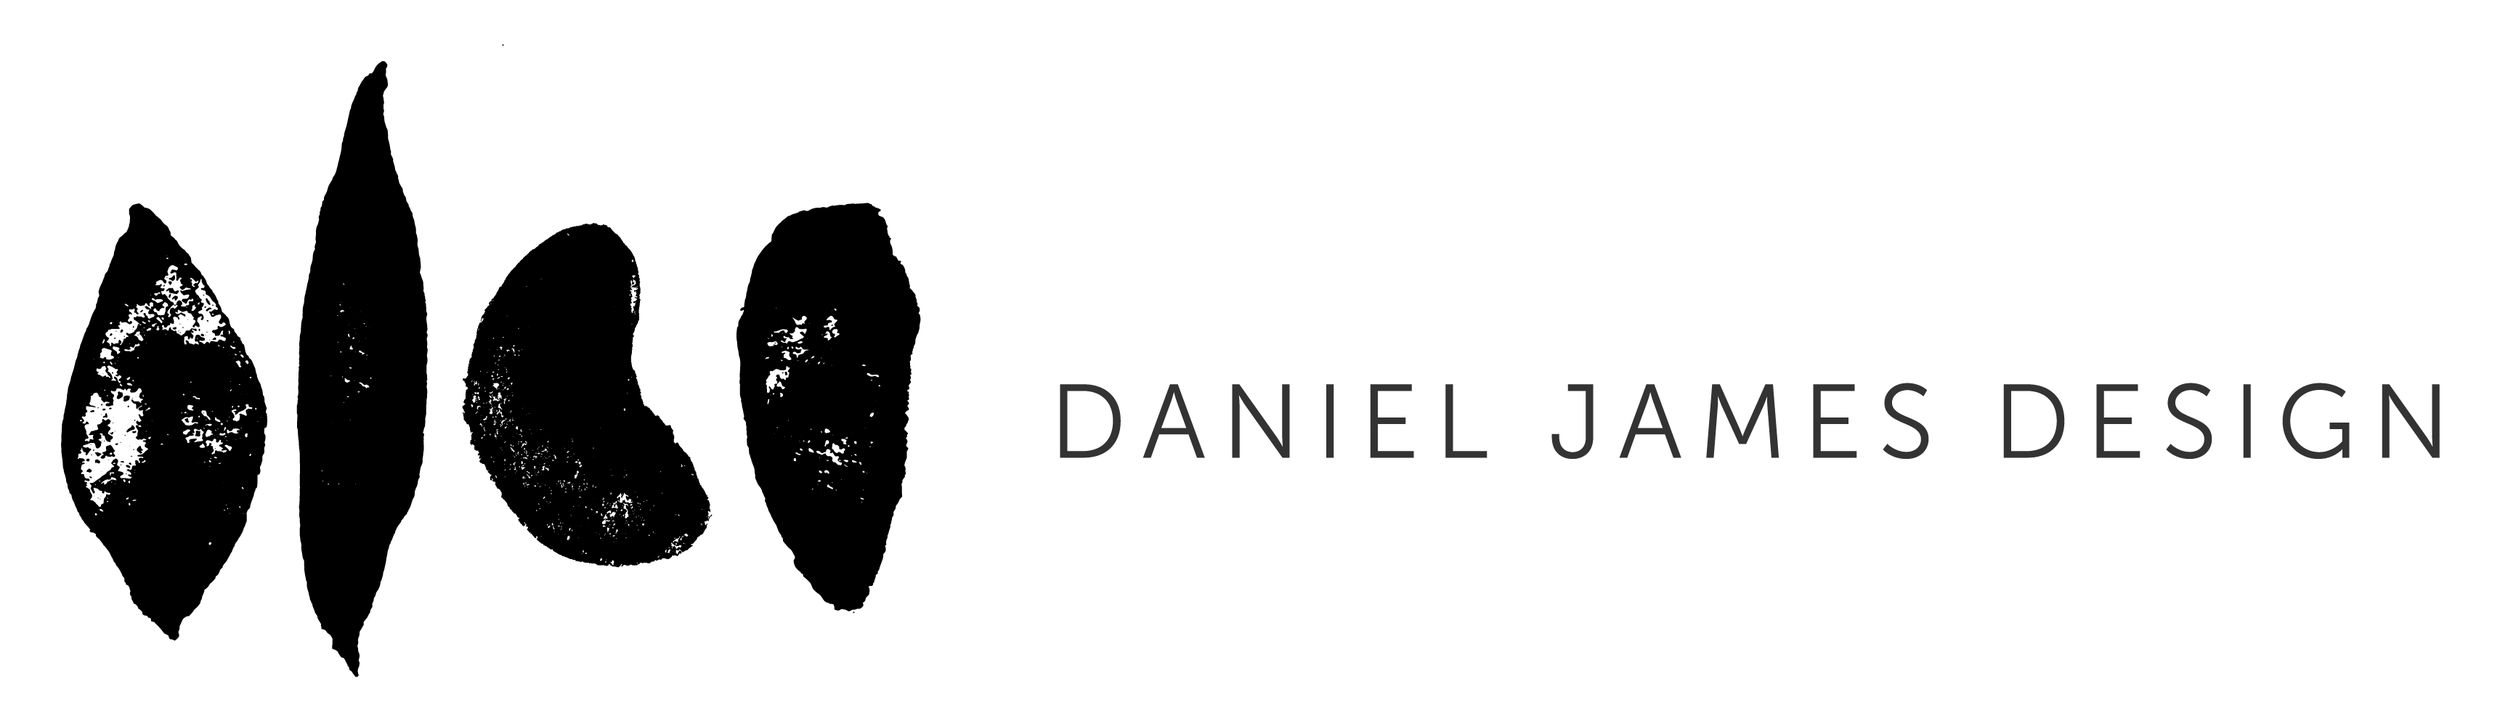   Daniel James Design  logo 